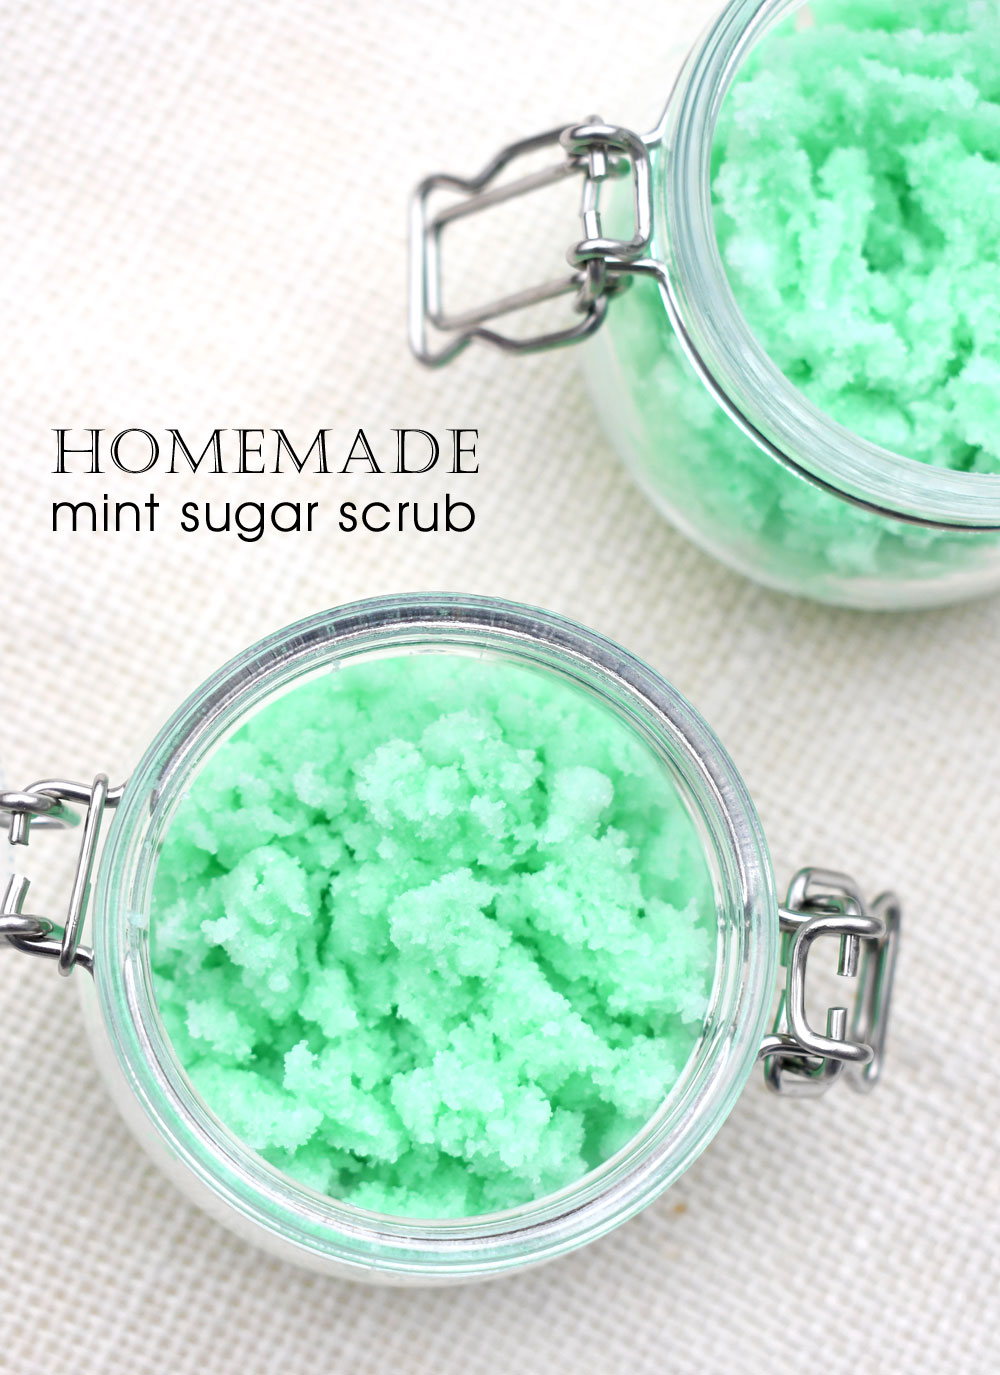 Homemade mint sugar scrub for a home spa day